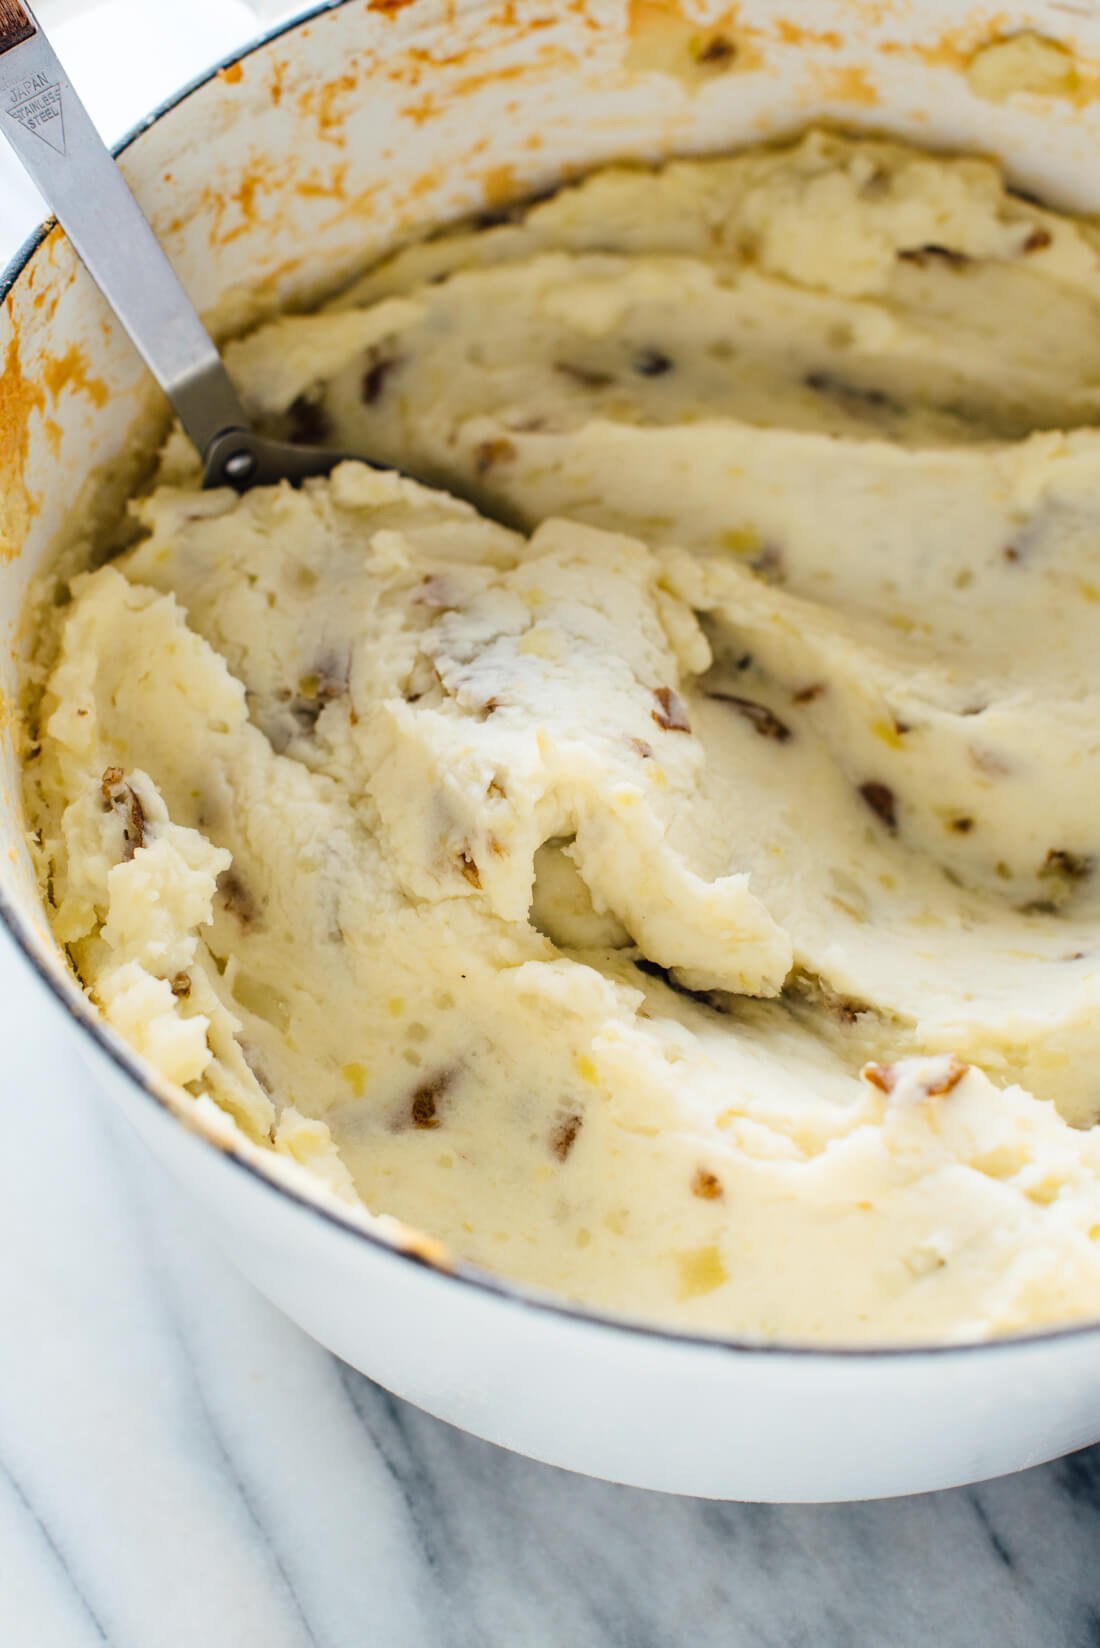 Make-ahead mashed potatoes recipe (my very favorite mashed potatoes!)